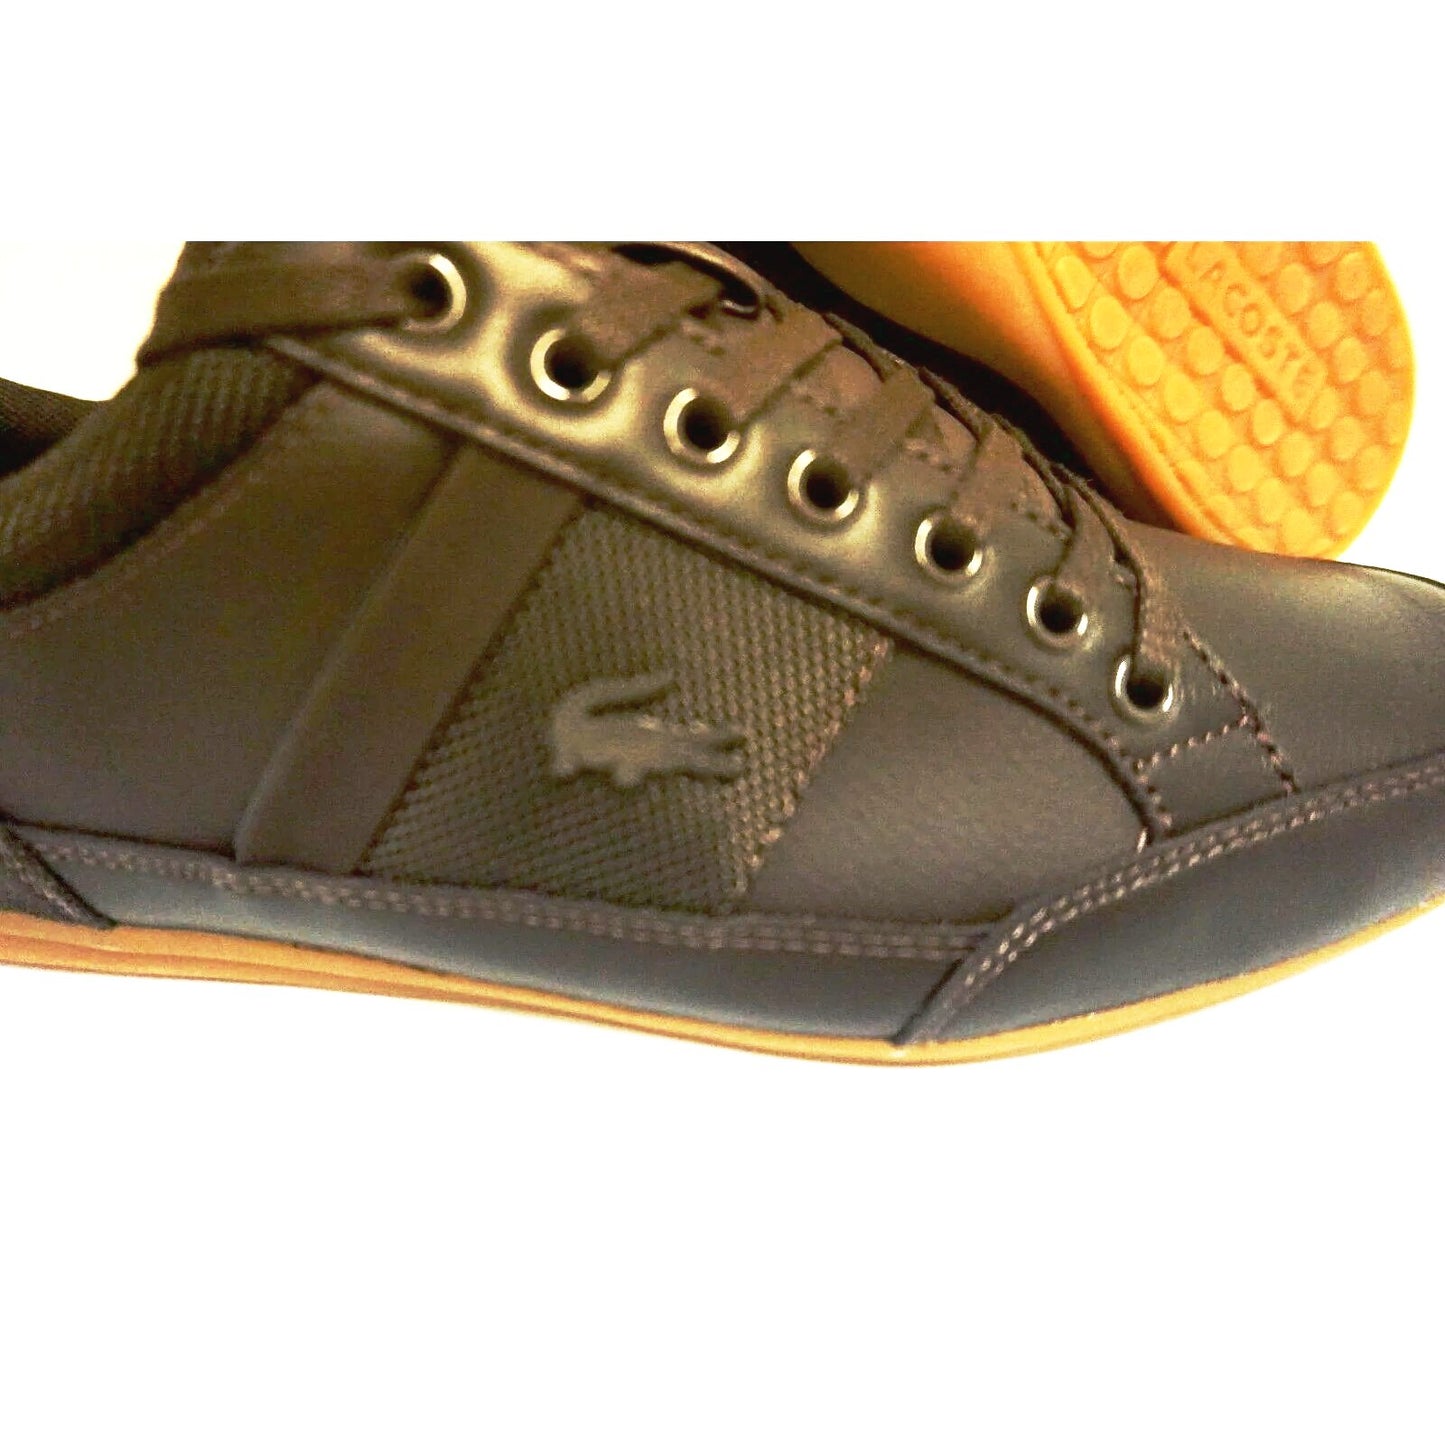 Lacoste men shoes chaymon 116 1 spm leather dark brown black size 8.5 new